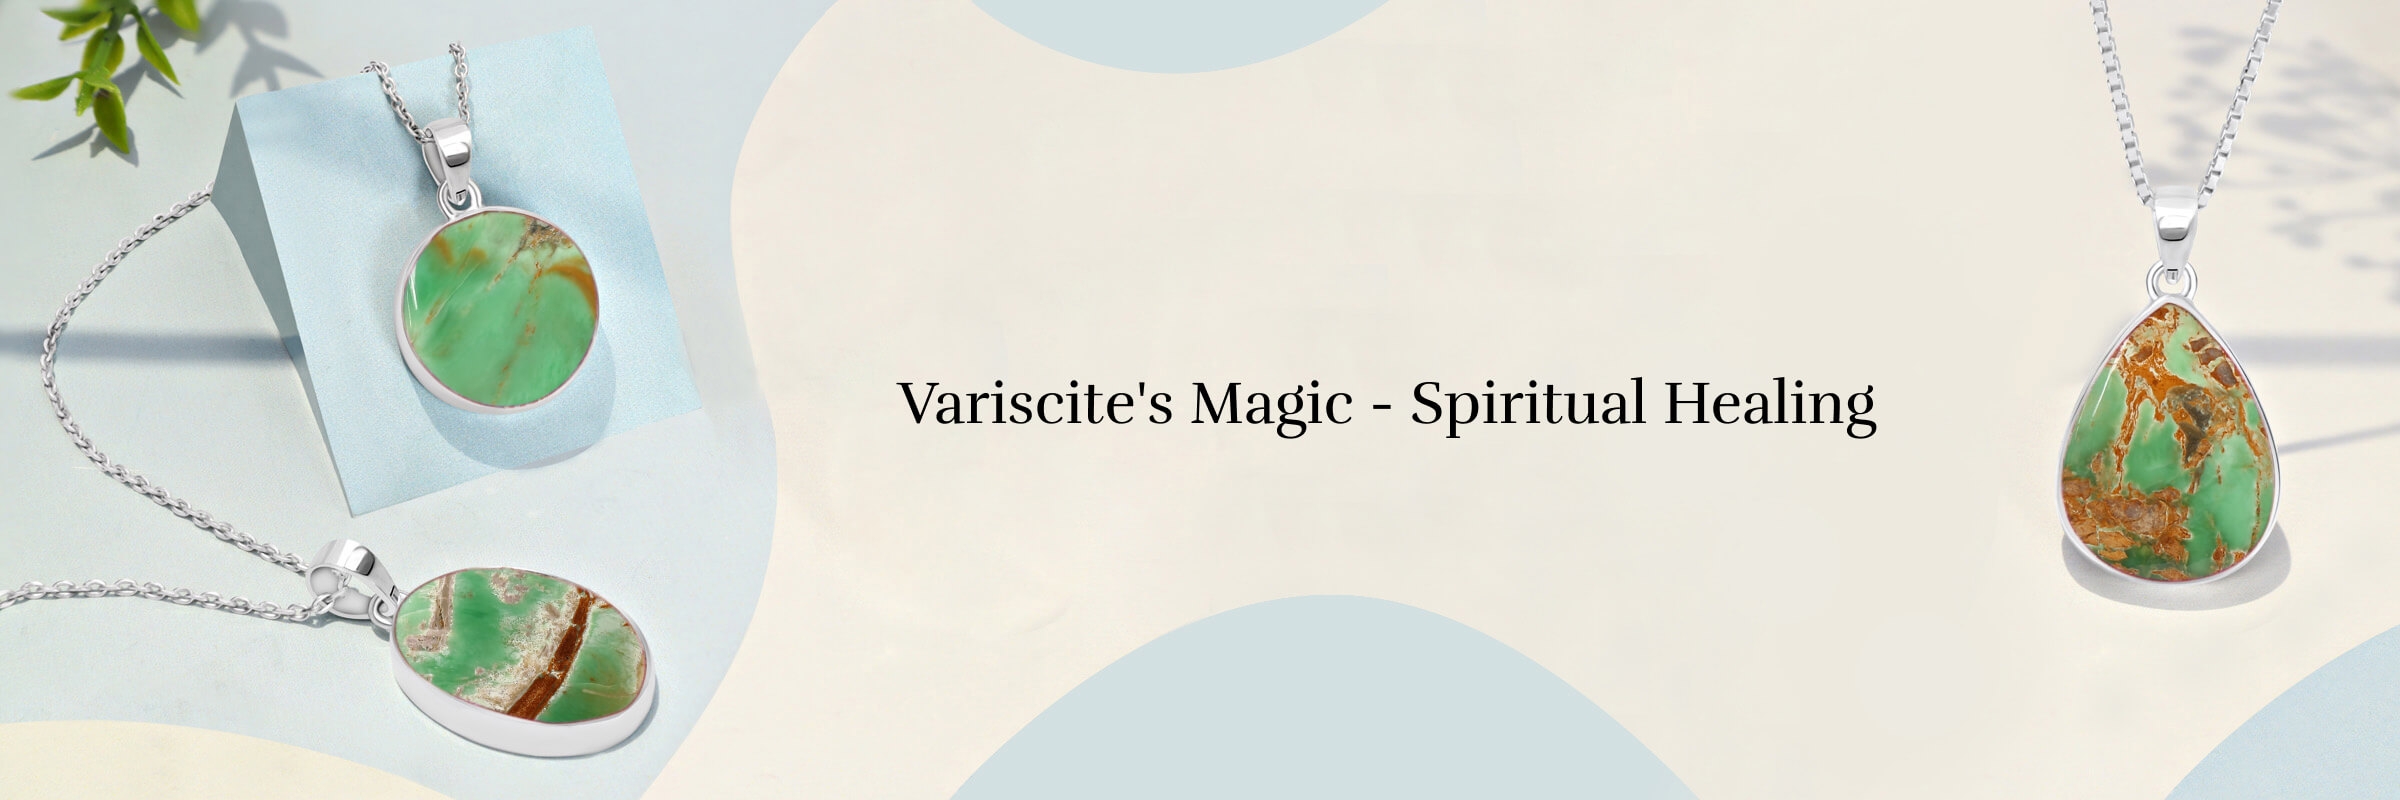 Variscite Spiritual Healing Properties